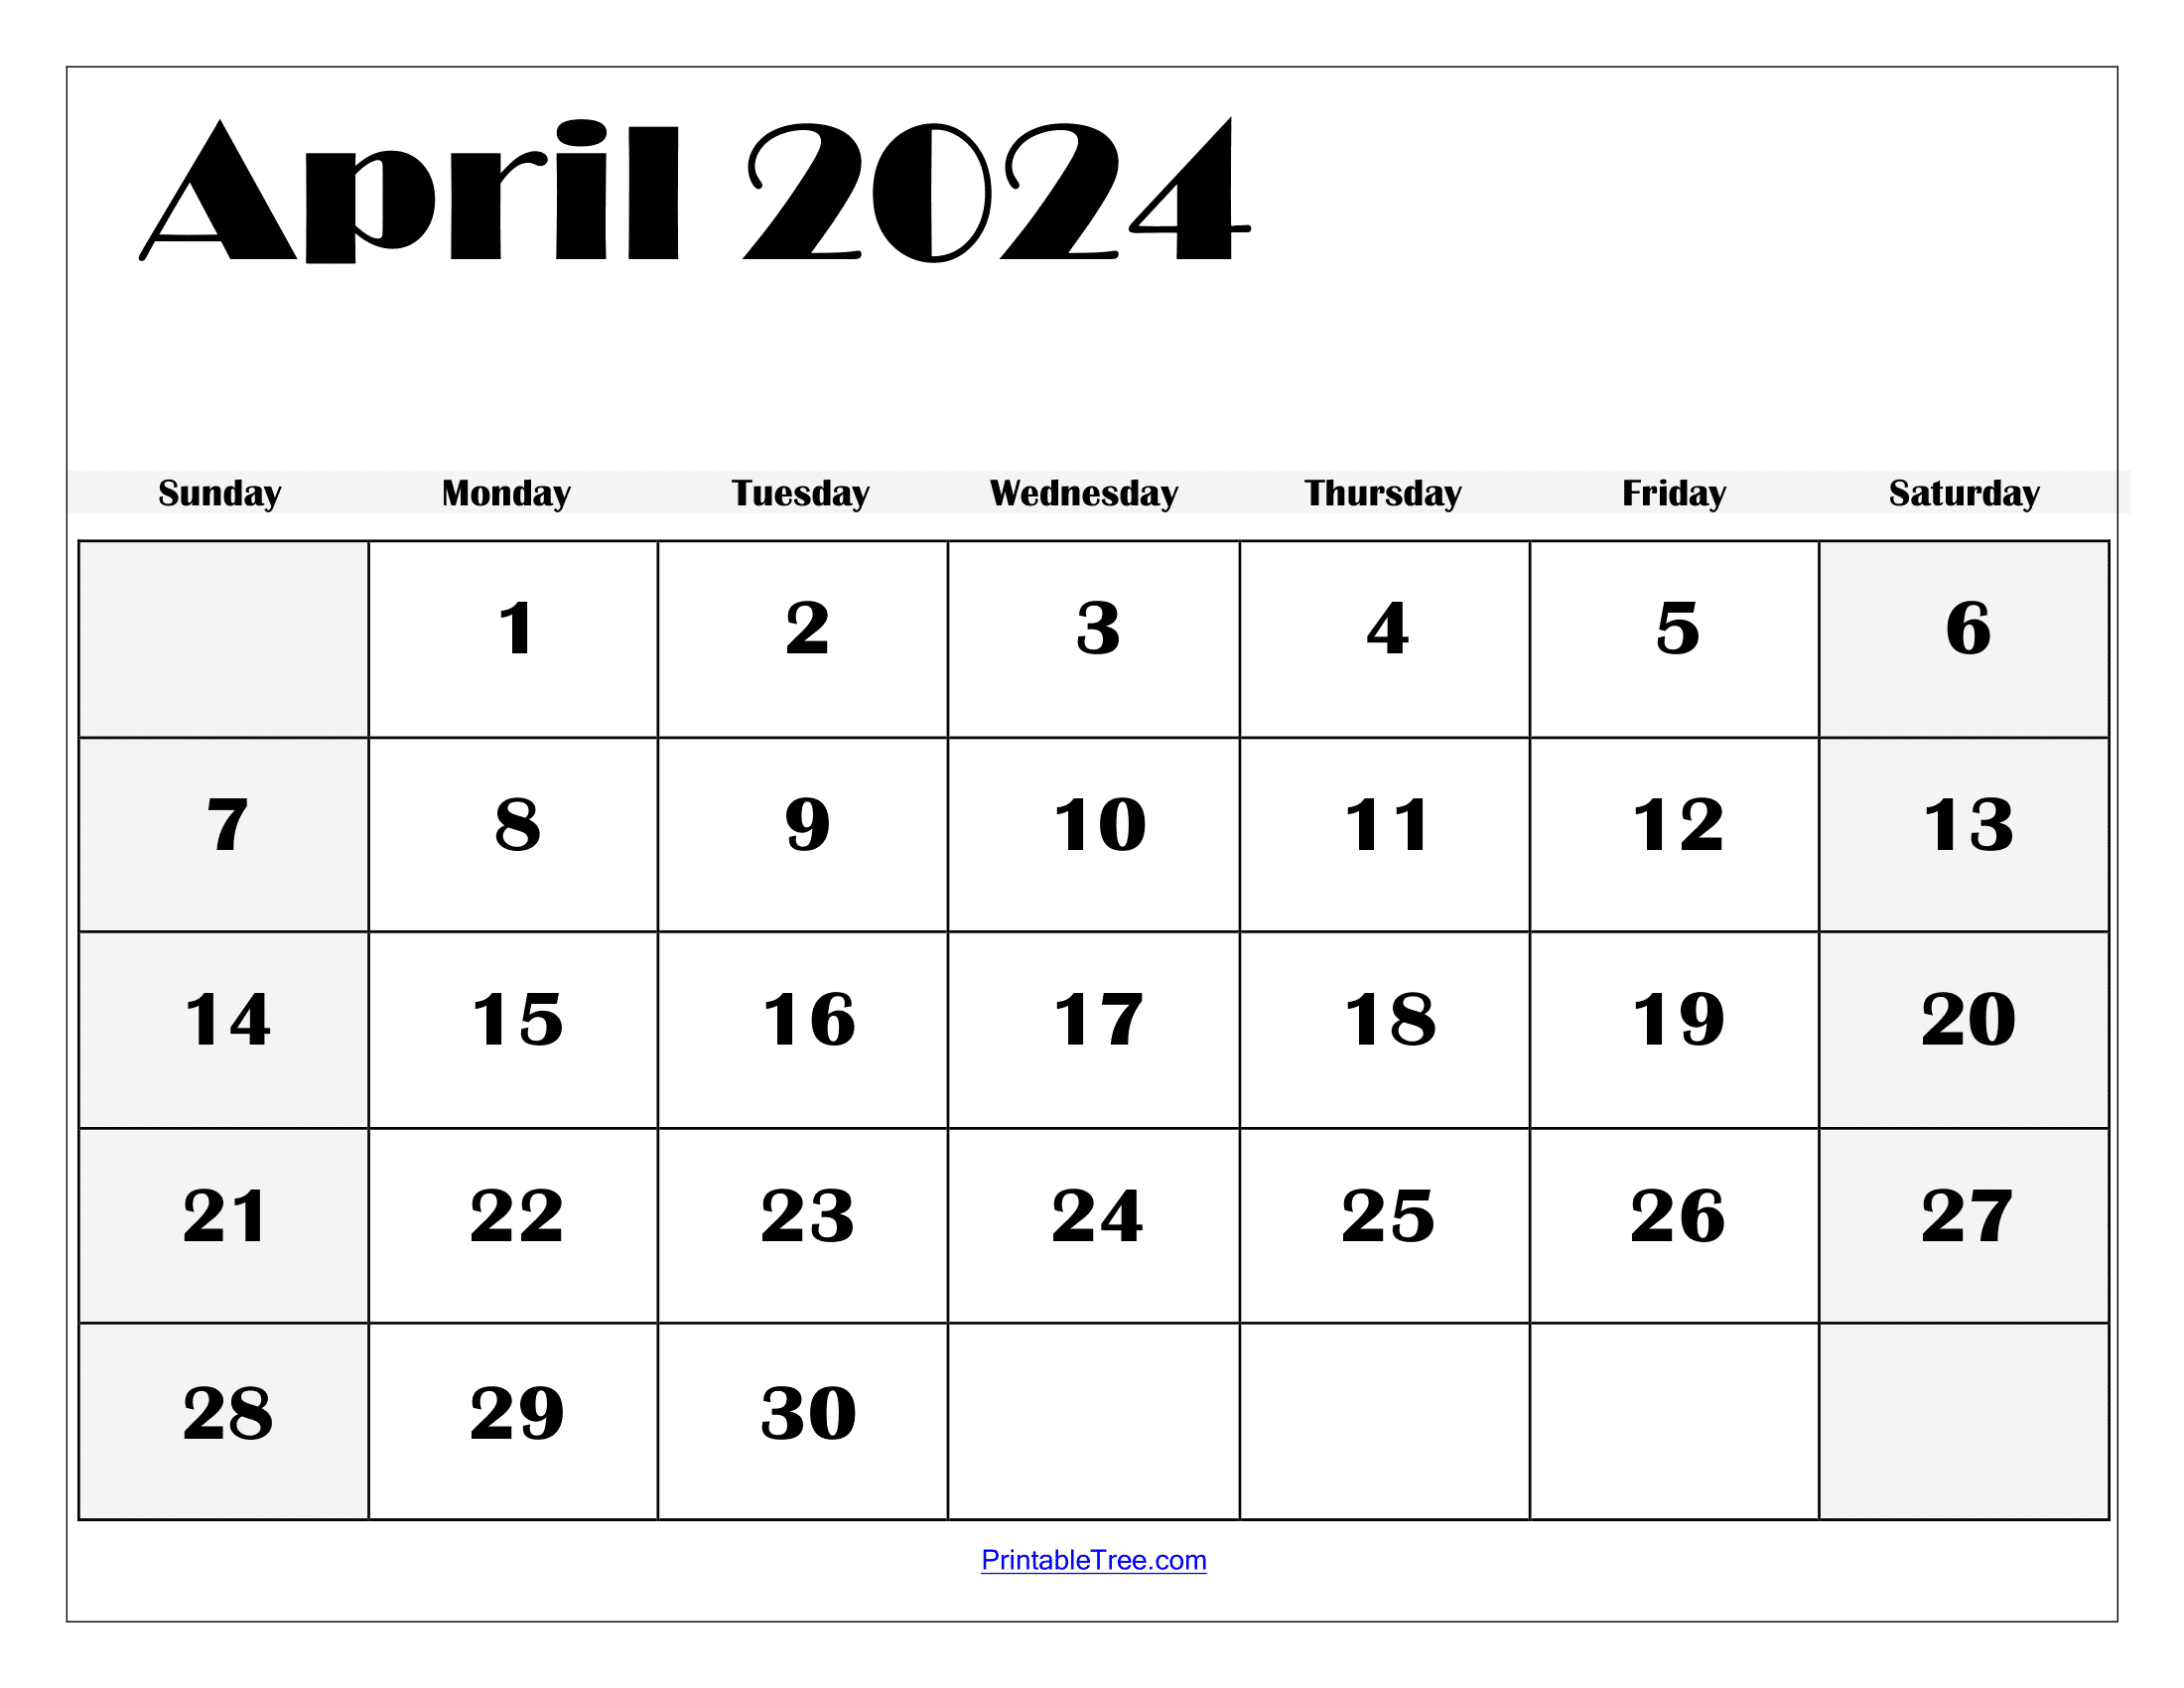 Blank April 2024 Calendar Printable Pdf Template With Holidays for Monthly Calendar April 2024 Printable